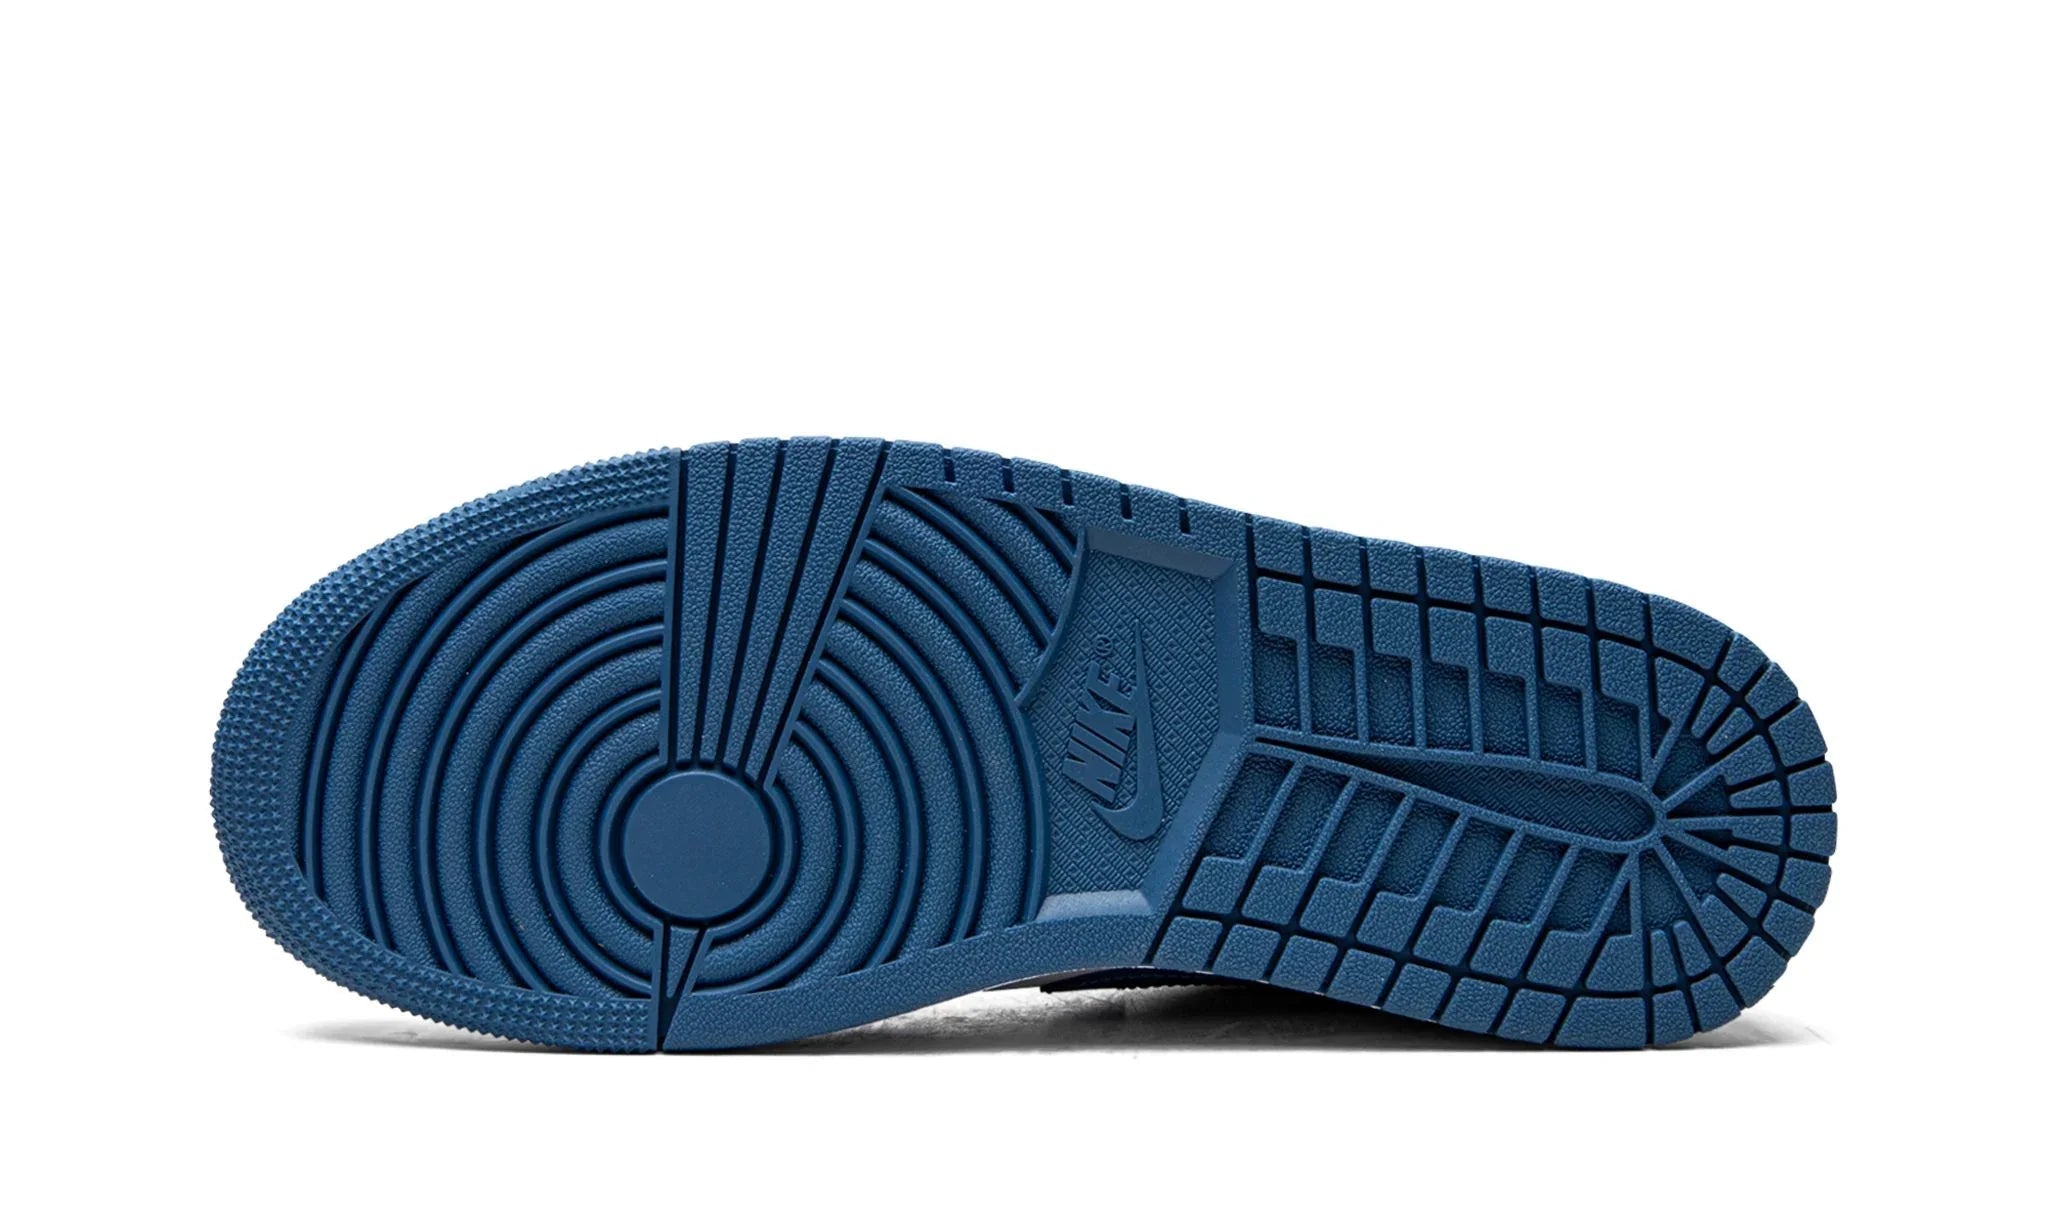 Jordan 1 Low "Marina Blue" (W) - DC0774-114 - Sneakers